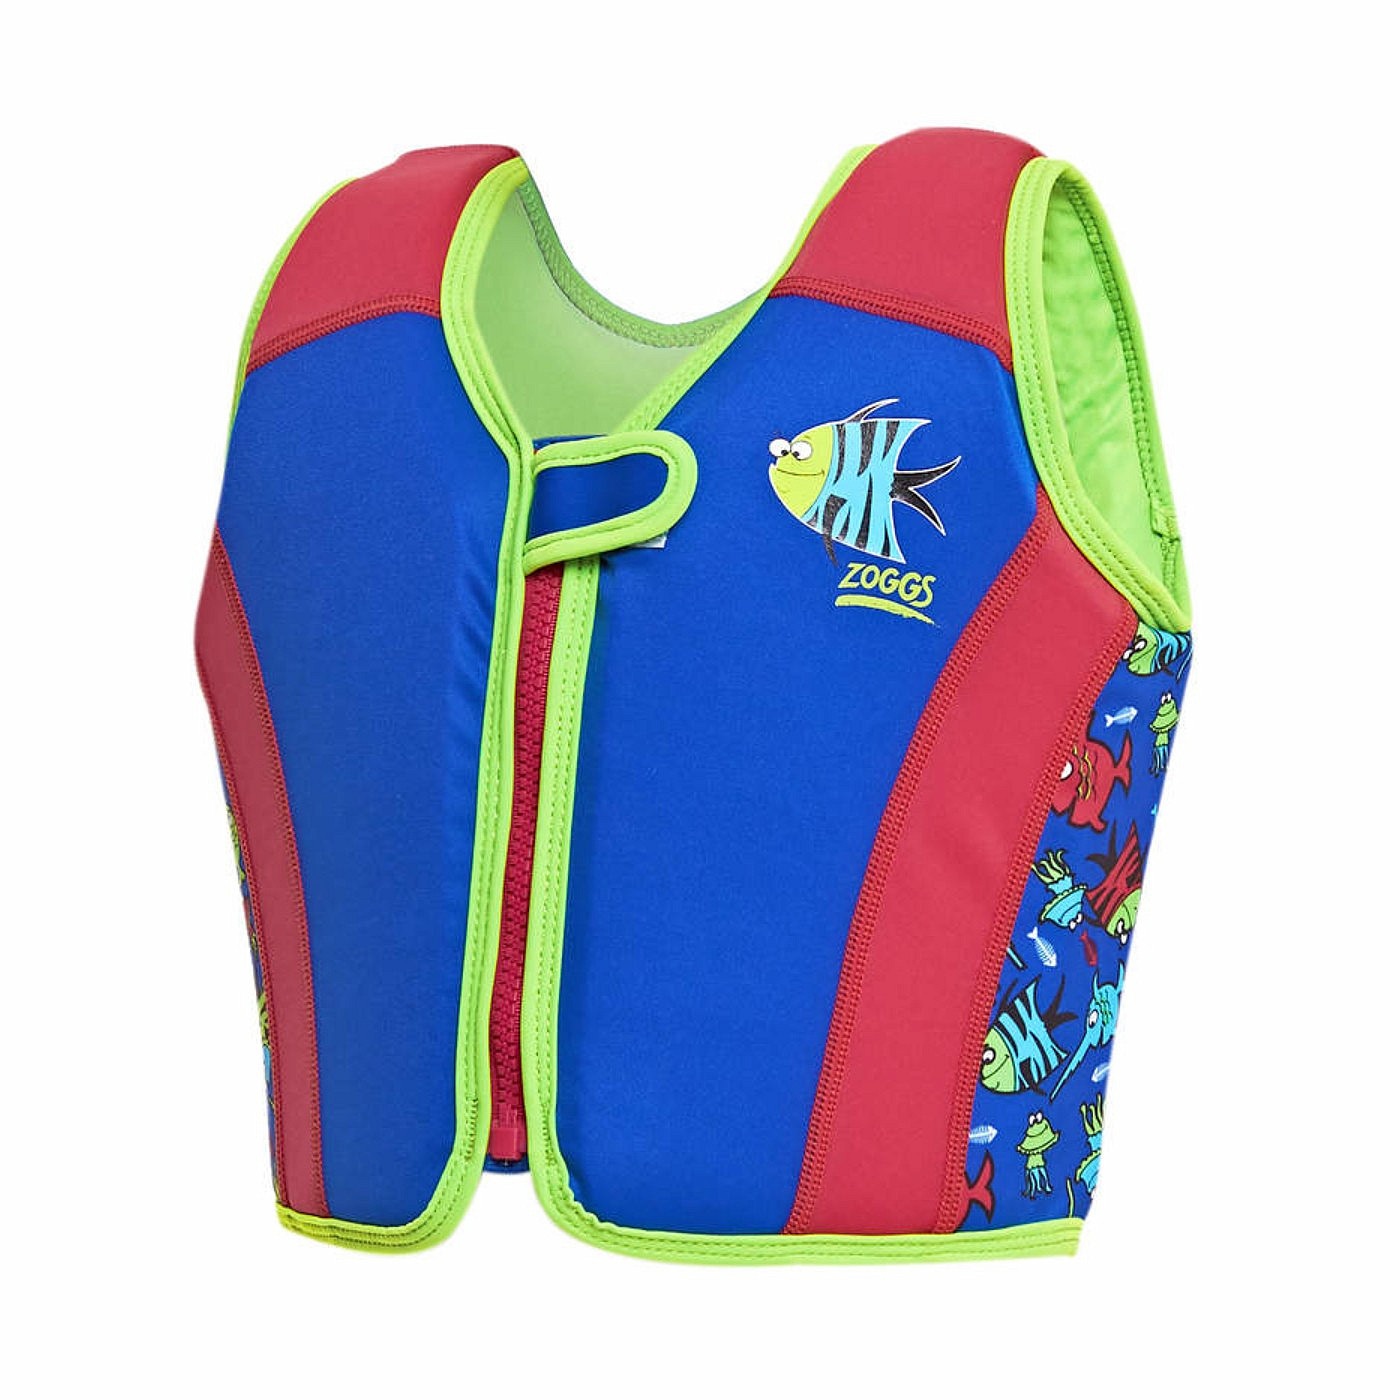 Zoggs Children Swimming Float Suit Swim Jacket Kids Buoyancy Aid 2-5 Years 